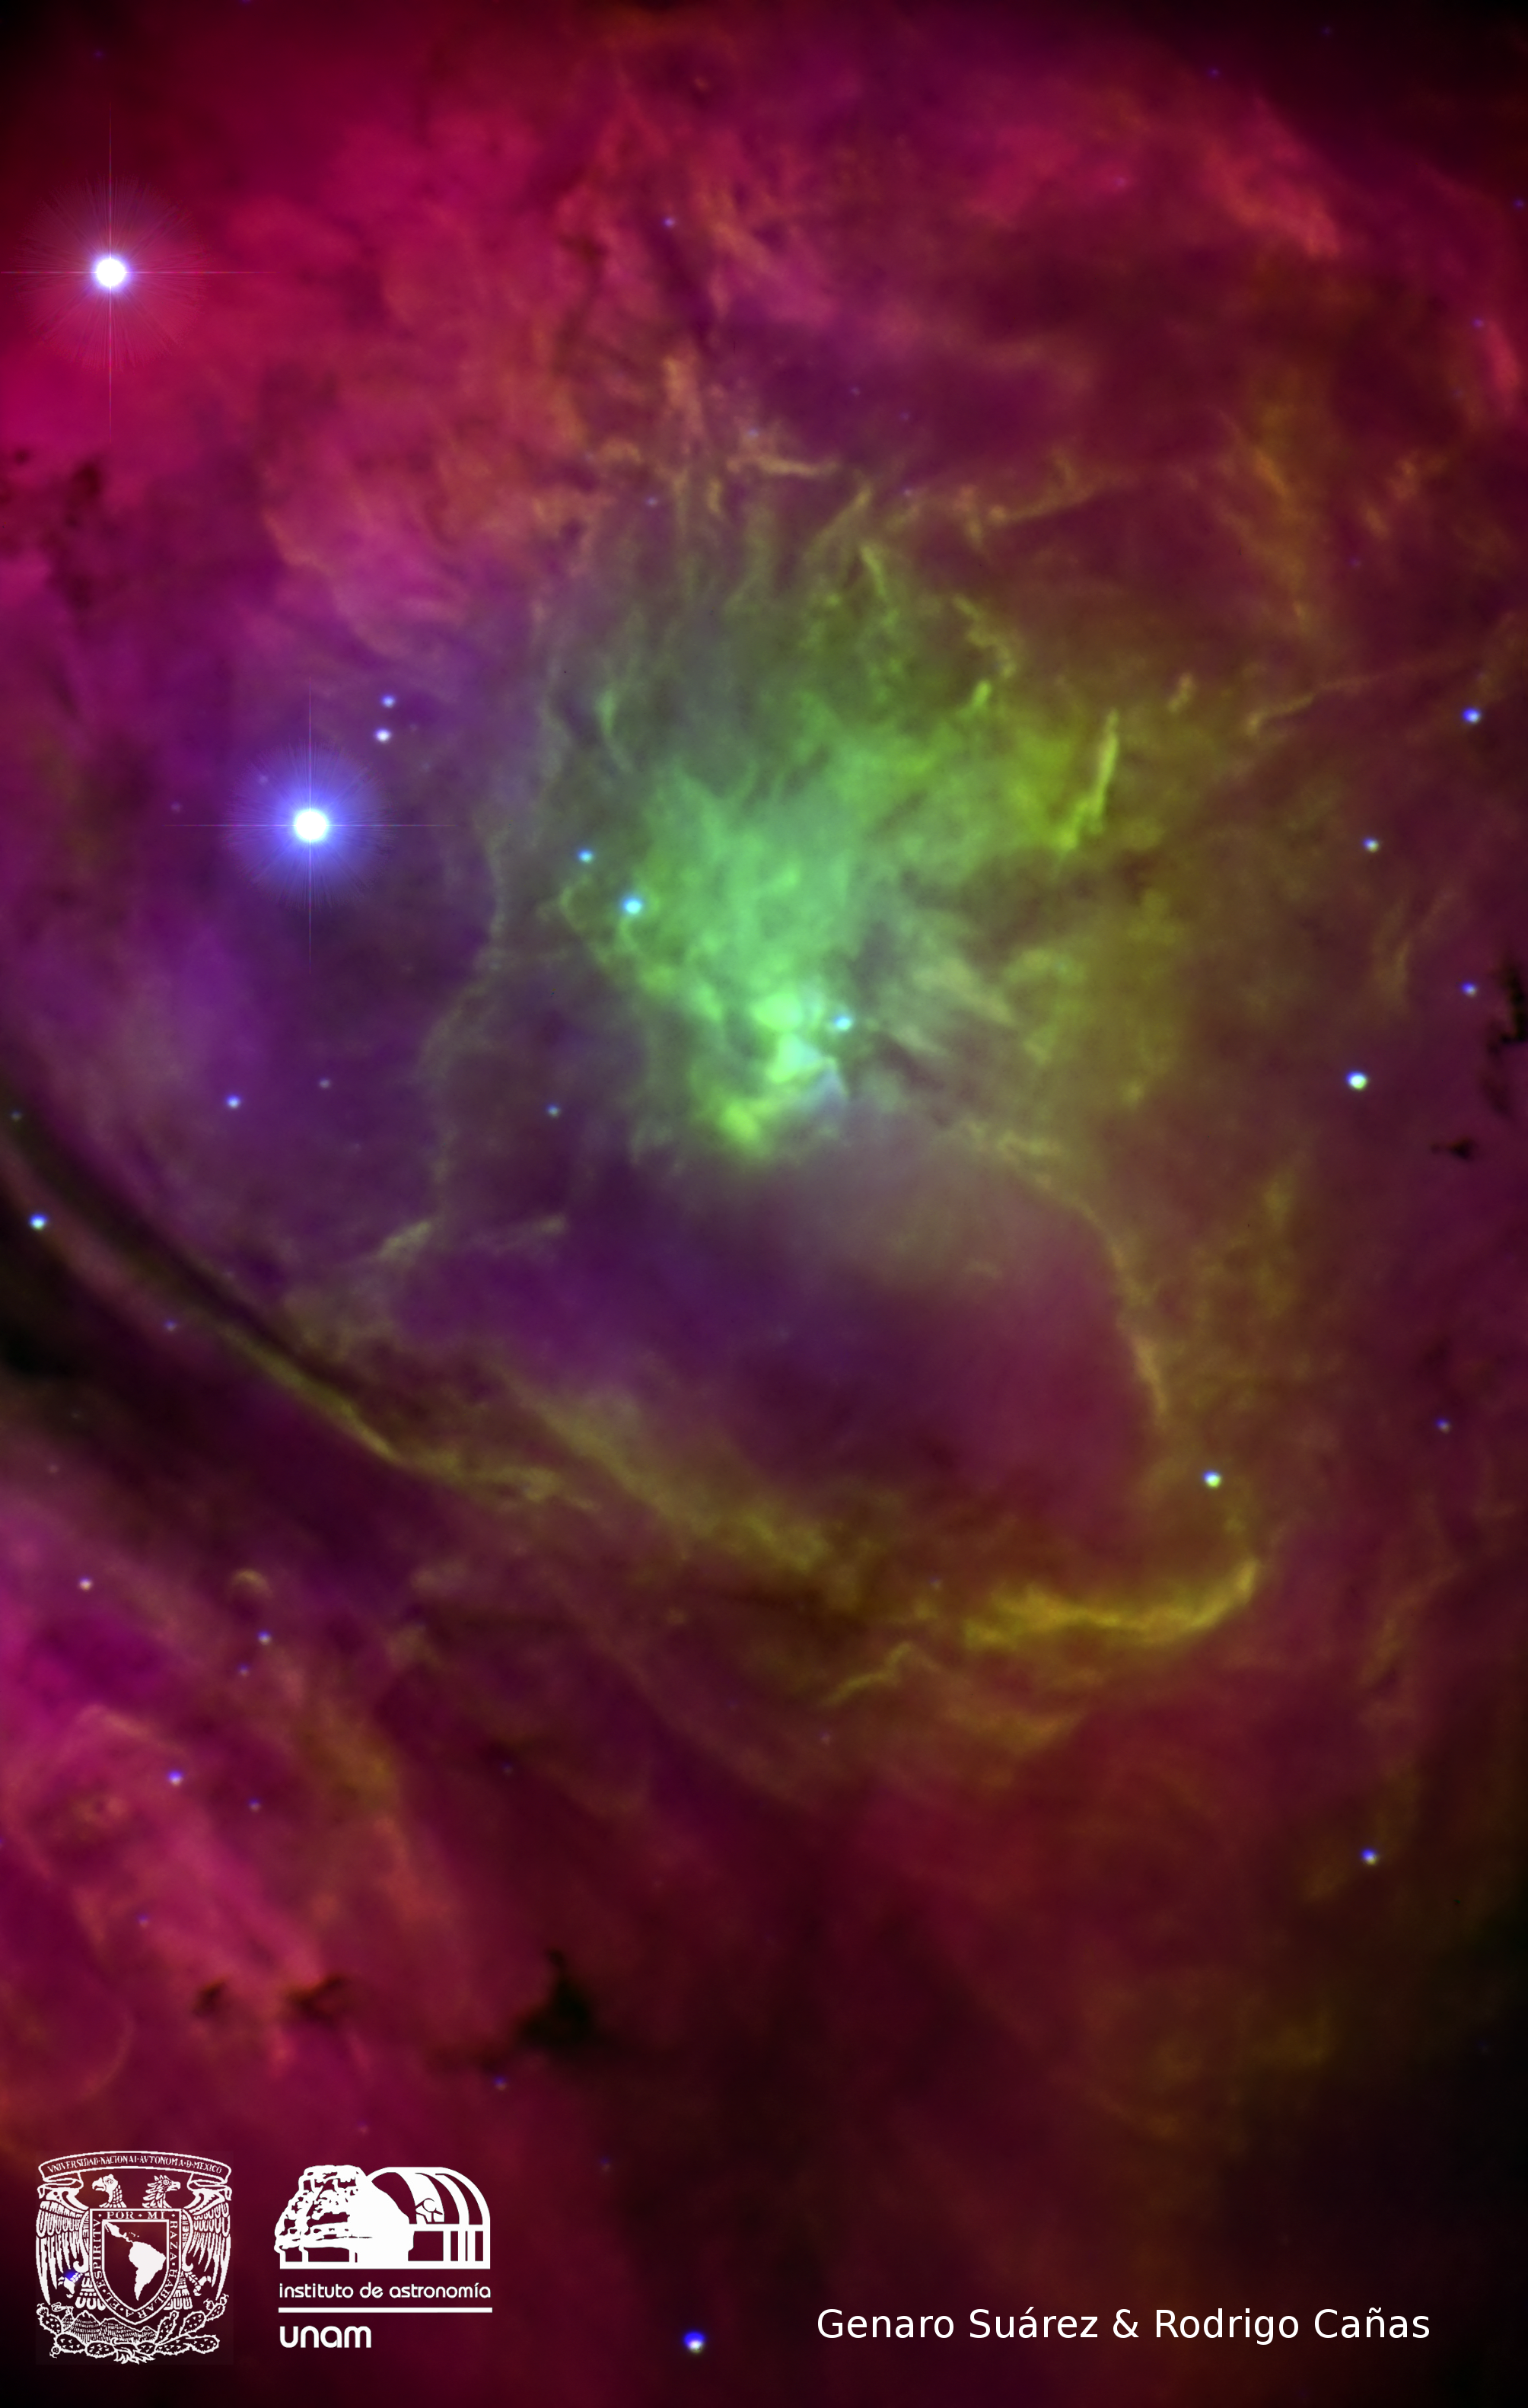 Messier 8 HaNO